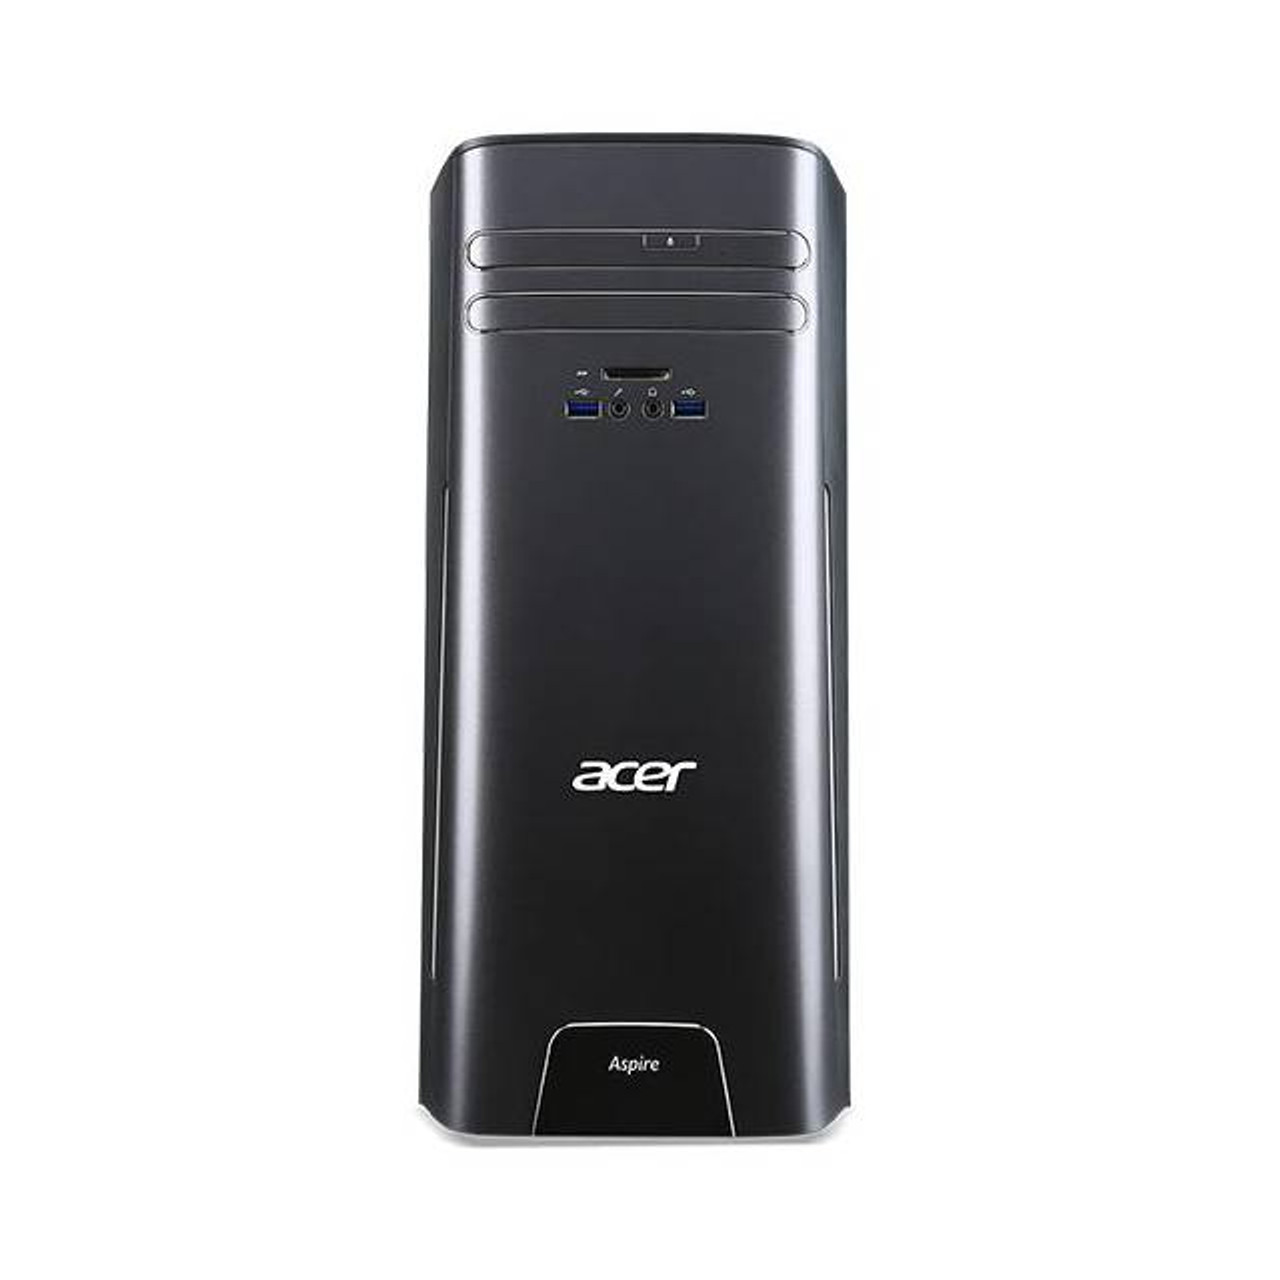 Acer Aspire TC AT3-710-UR52 Intel Core i5-6400 2.7GHz/ 8GB DDR3/ 2TB HDD/ DVD±RW/ Windows 10 Home Desktop PC (Black)